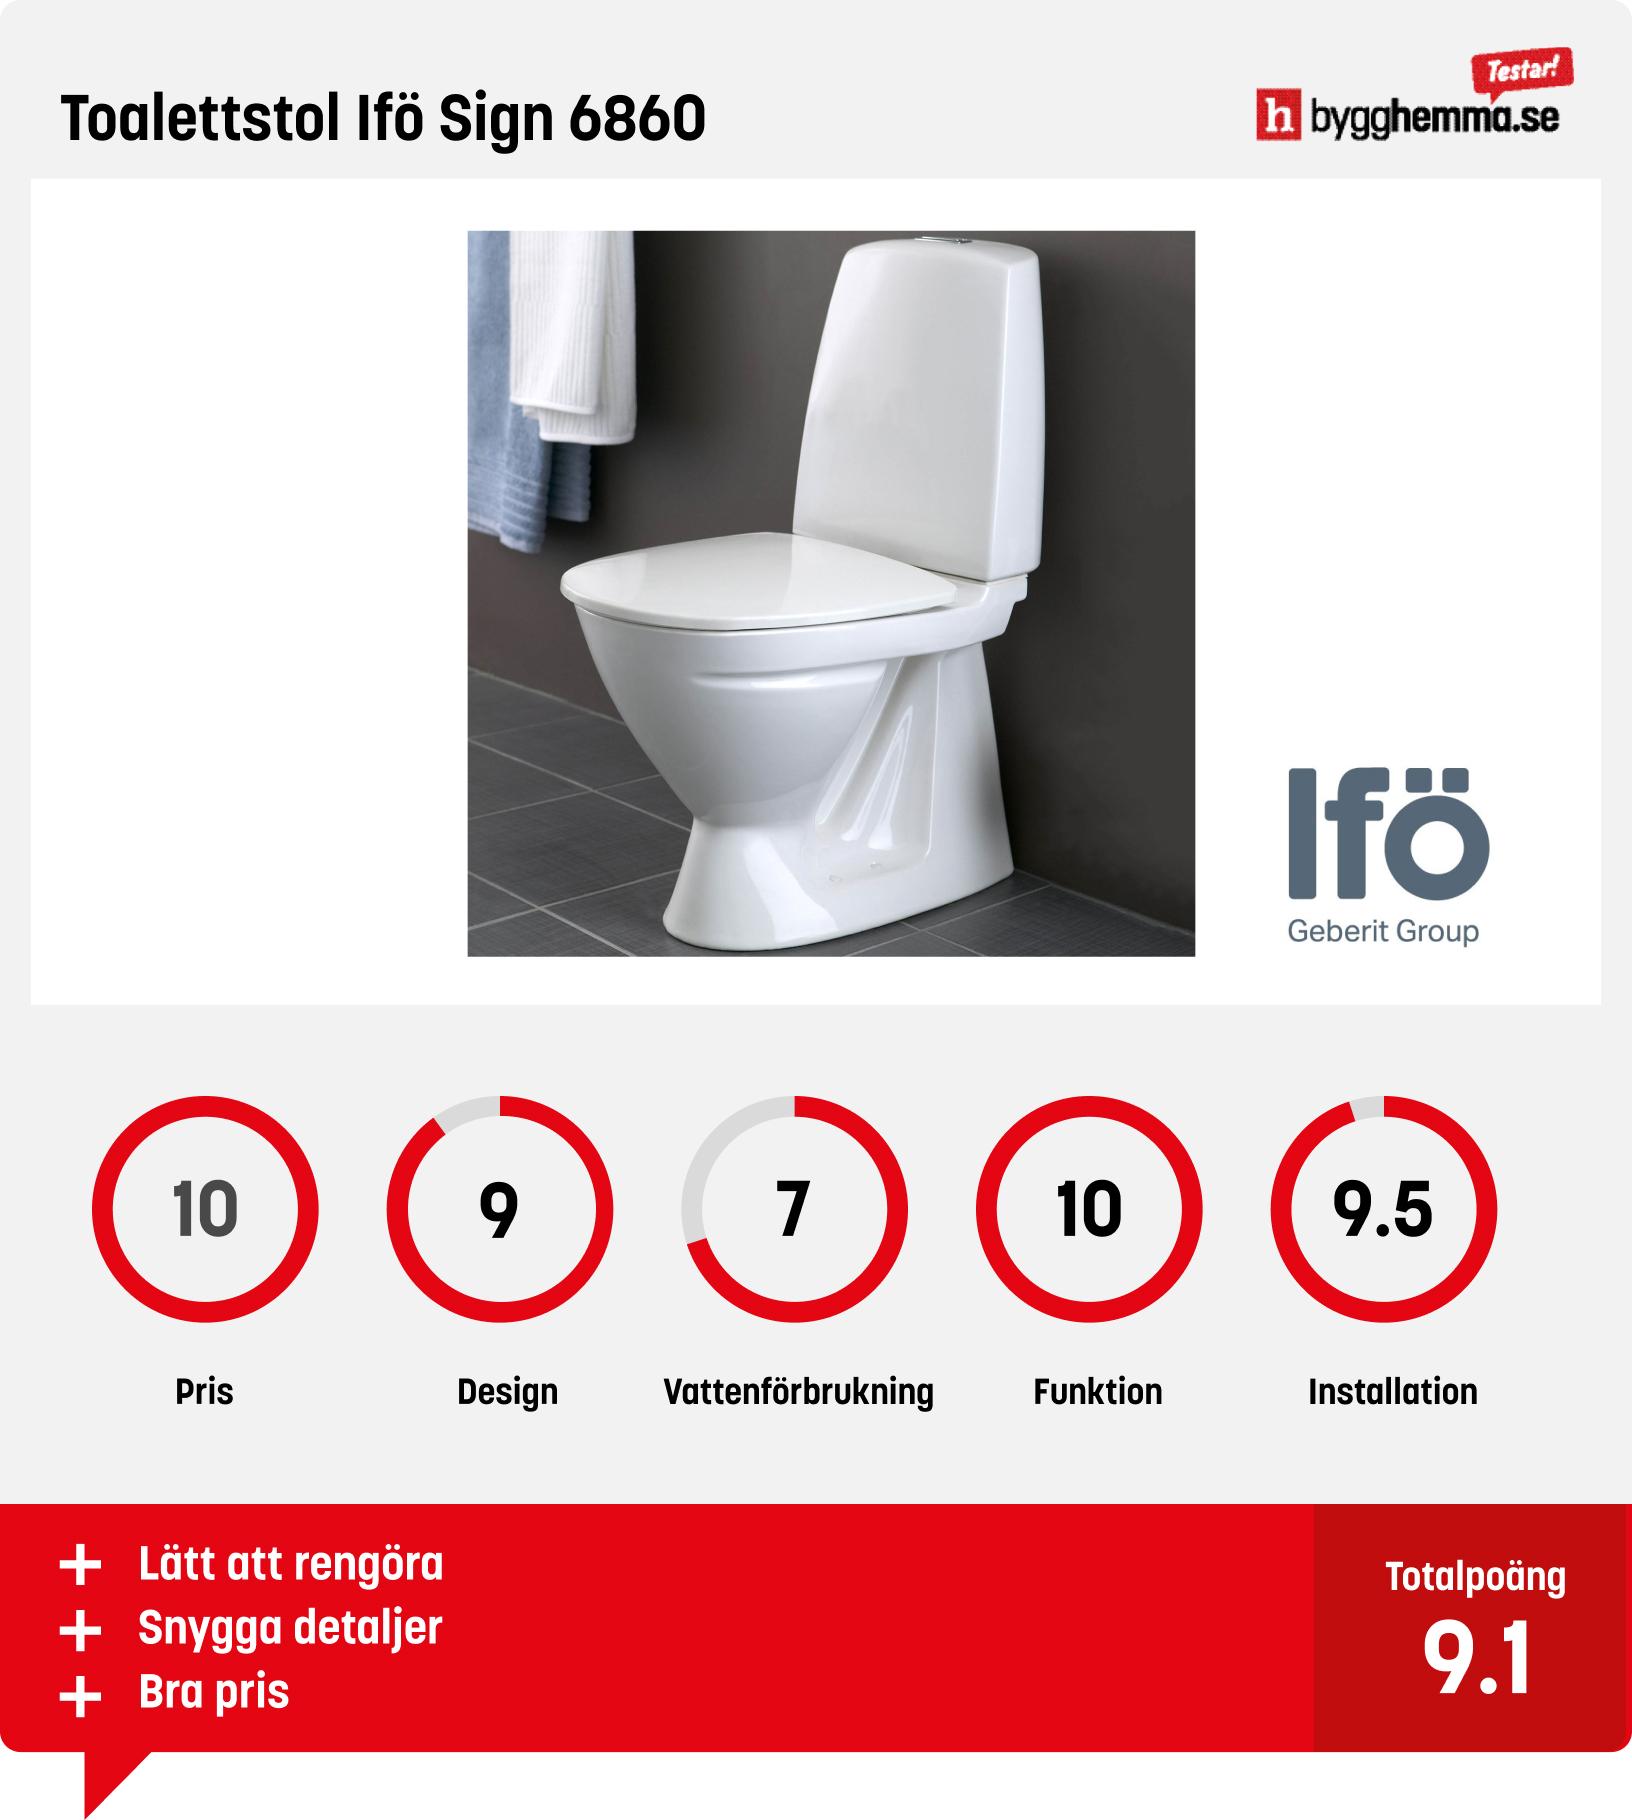 Snålspolande toalett bäst i test - Toalettstol Ifö Sign 6860